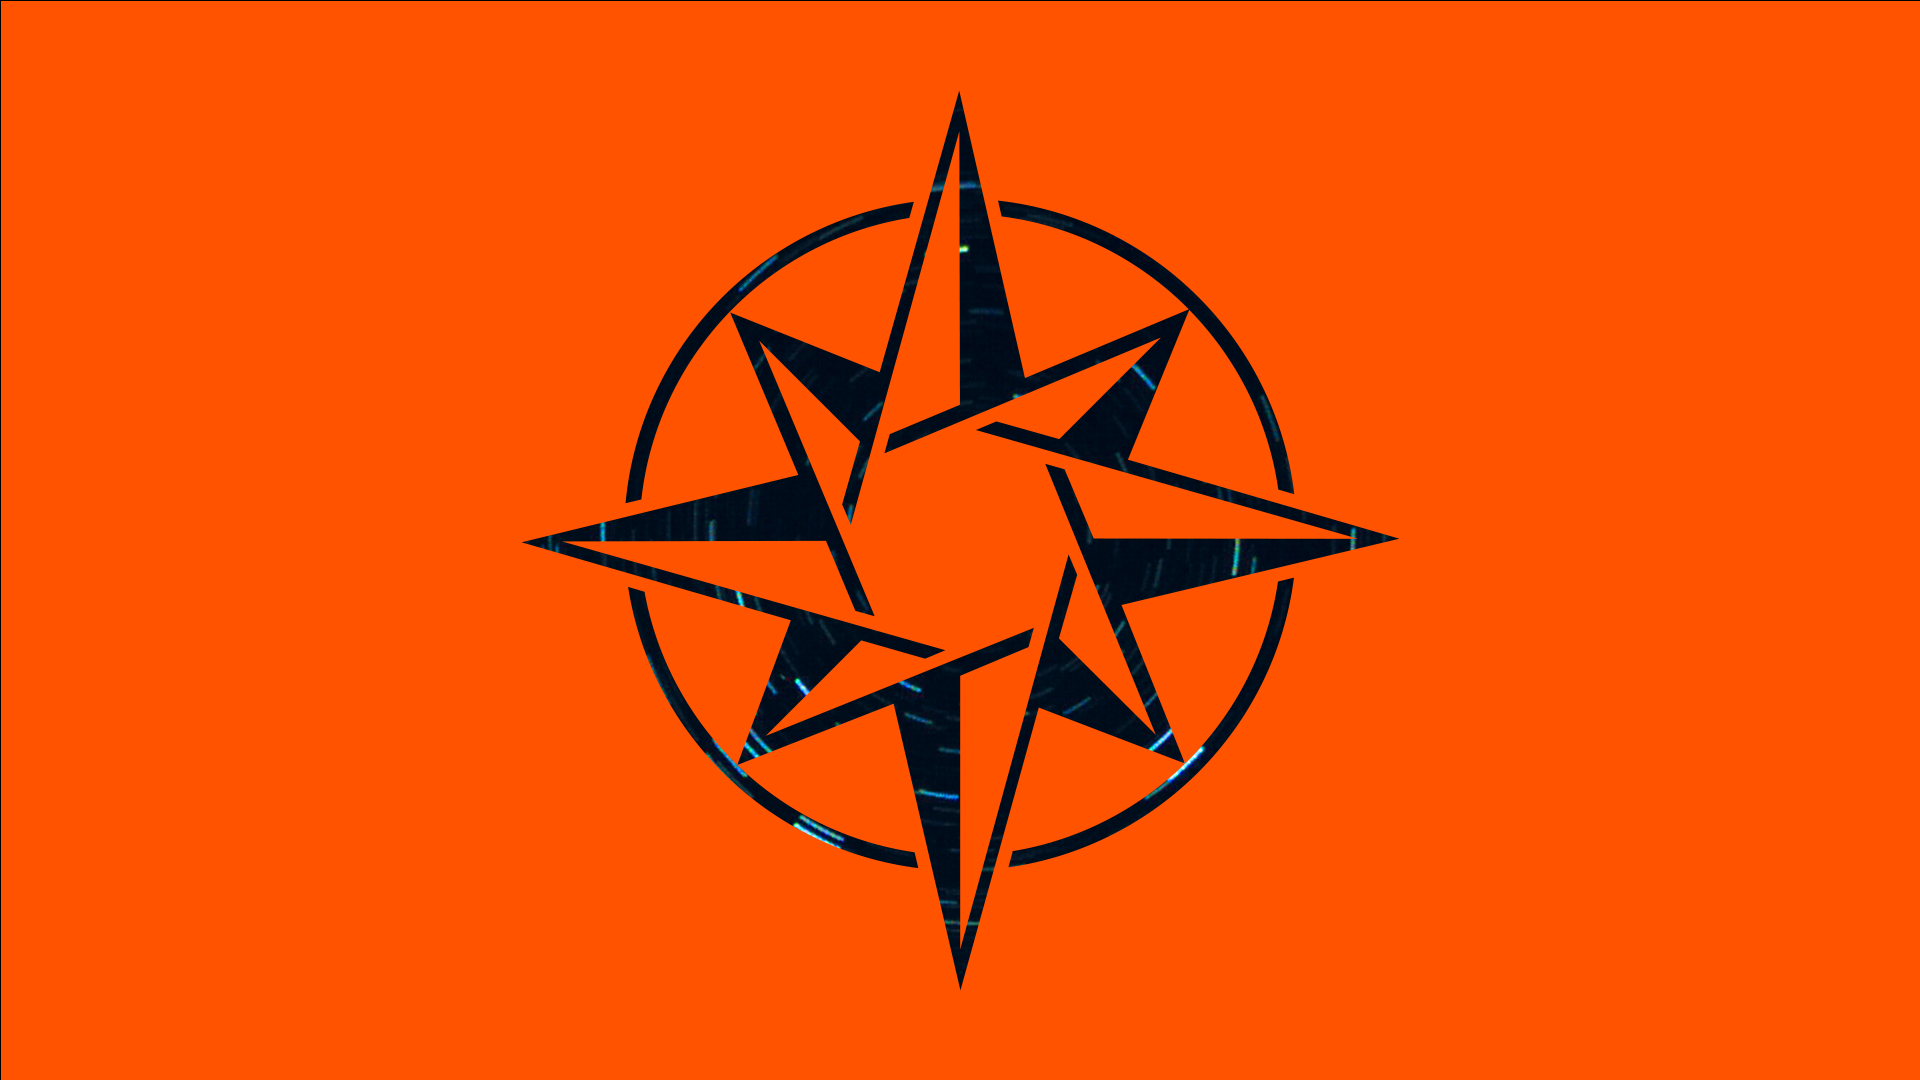 circular-exposer-symbol-orange-bg.png